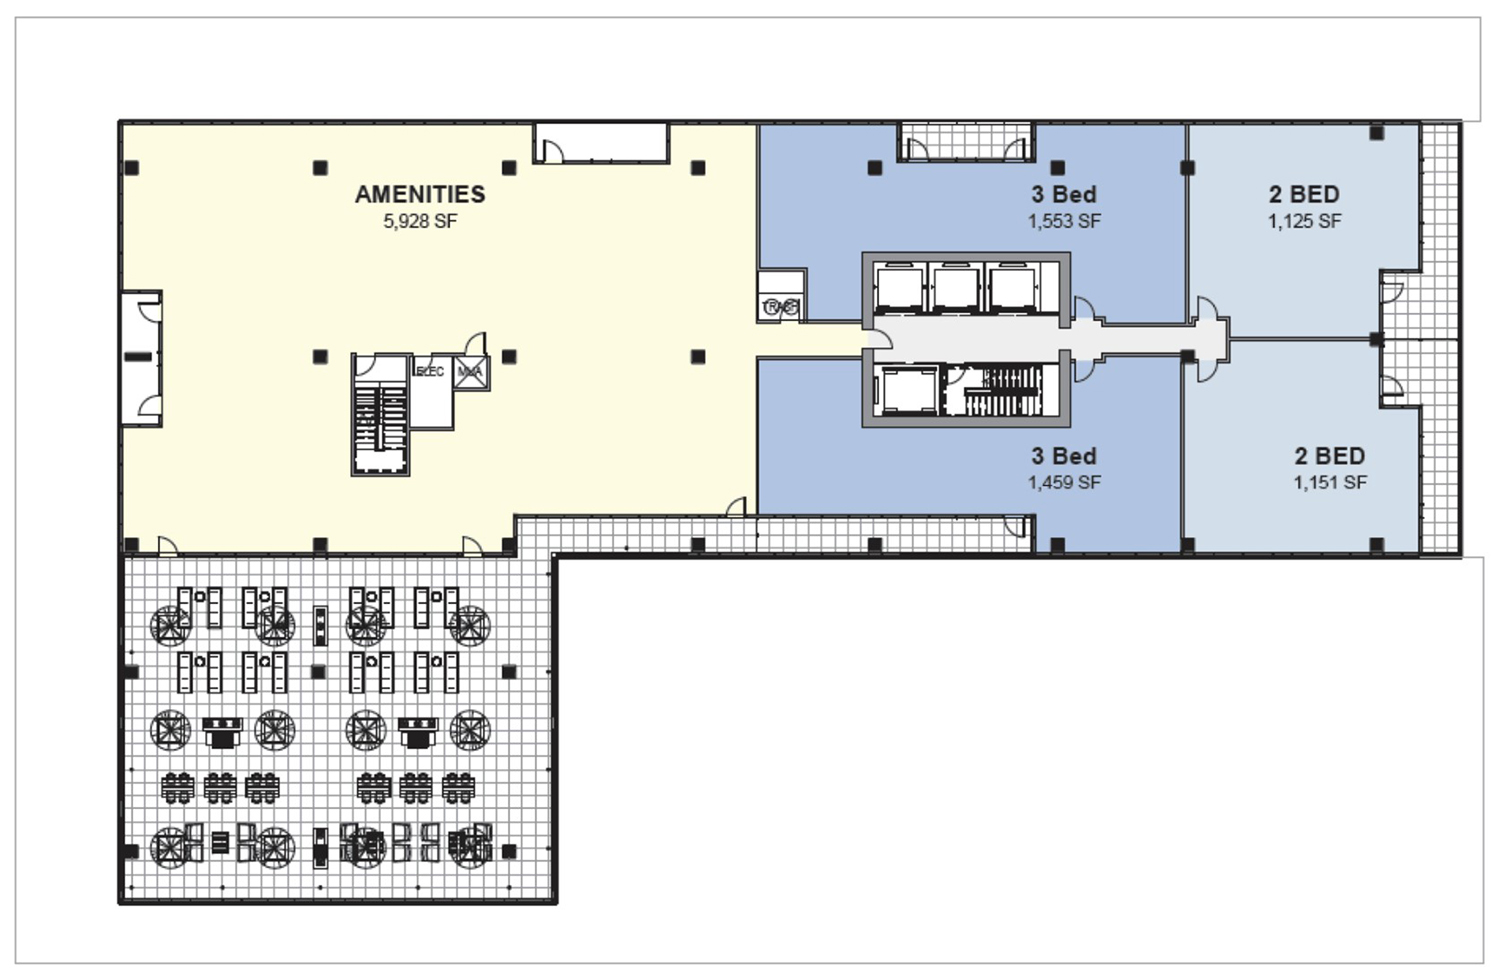 16th Floor Plan for 160 N Elizabeth Street. Drawing by Thomas Roszak Architecture